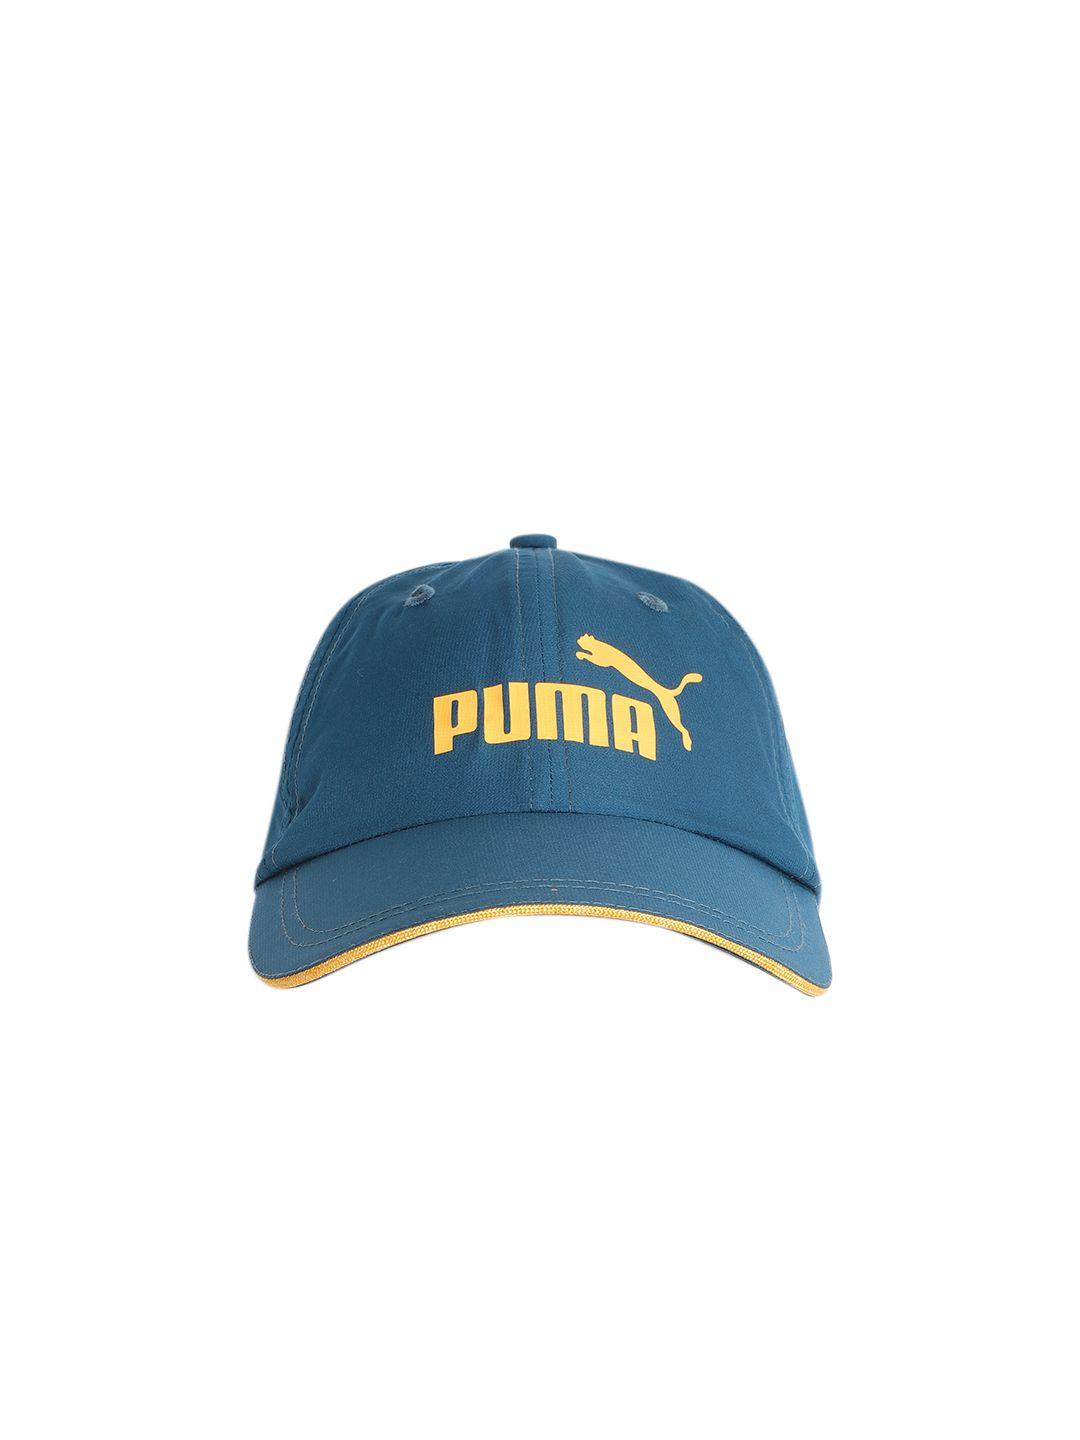 puma unisex teal blue & mustard yellow performance visor brand logo print sports cap